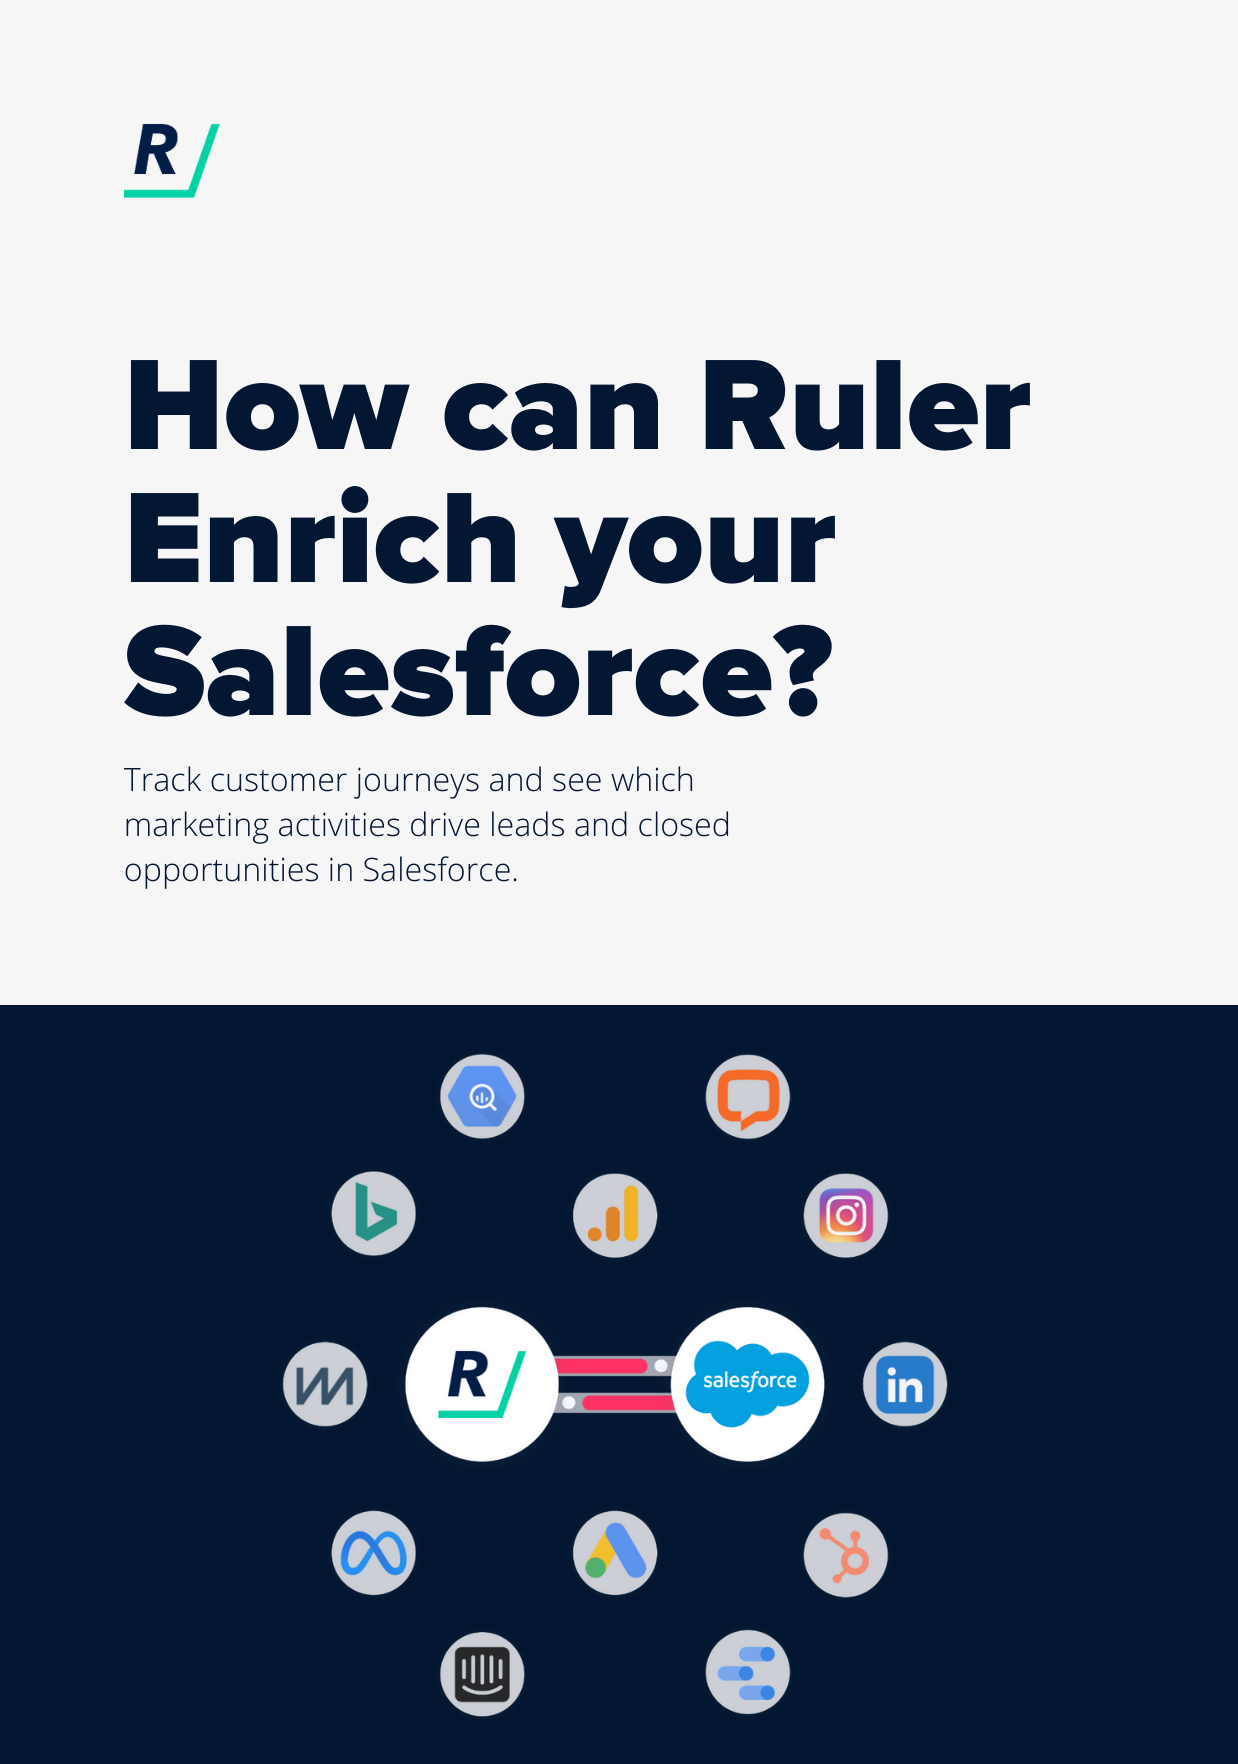 How can Ruler Enrich Salesforce